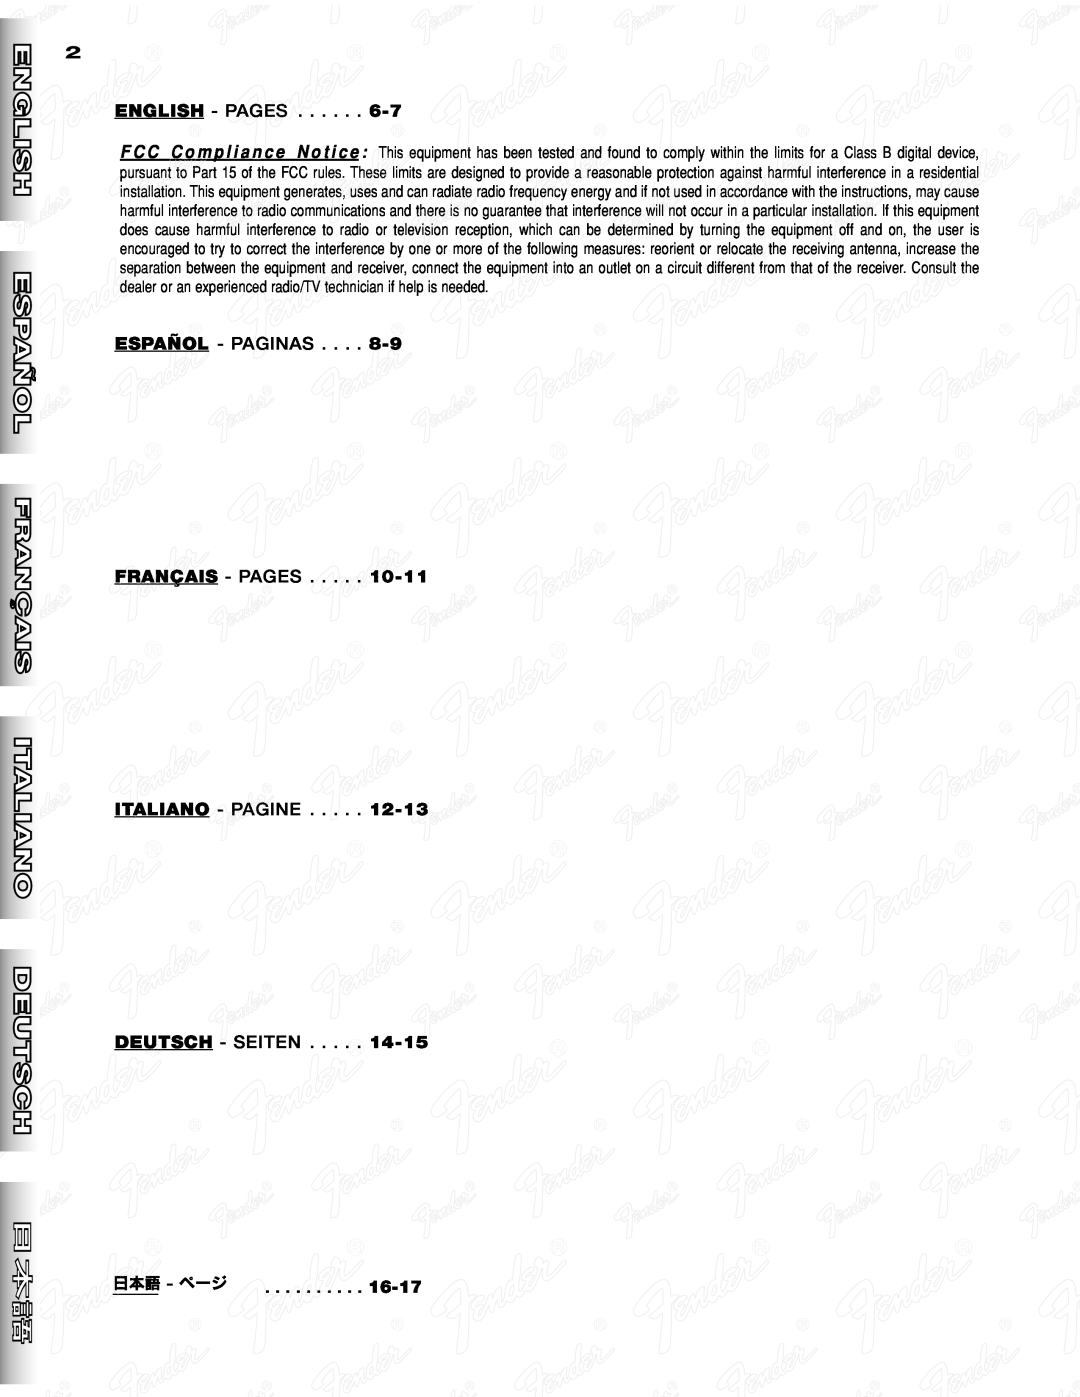 Fender 150 manual English- Pages, Español- Paginas, Français- Pages, Italiano- Pagine, Deutsch- Seiten, 16-17 